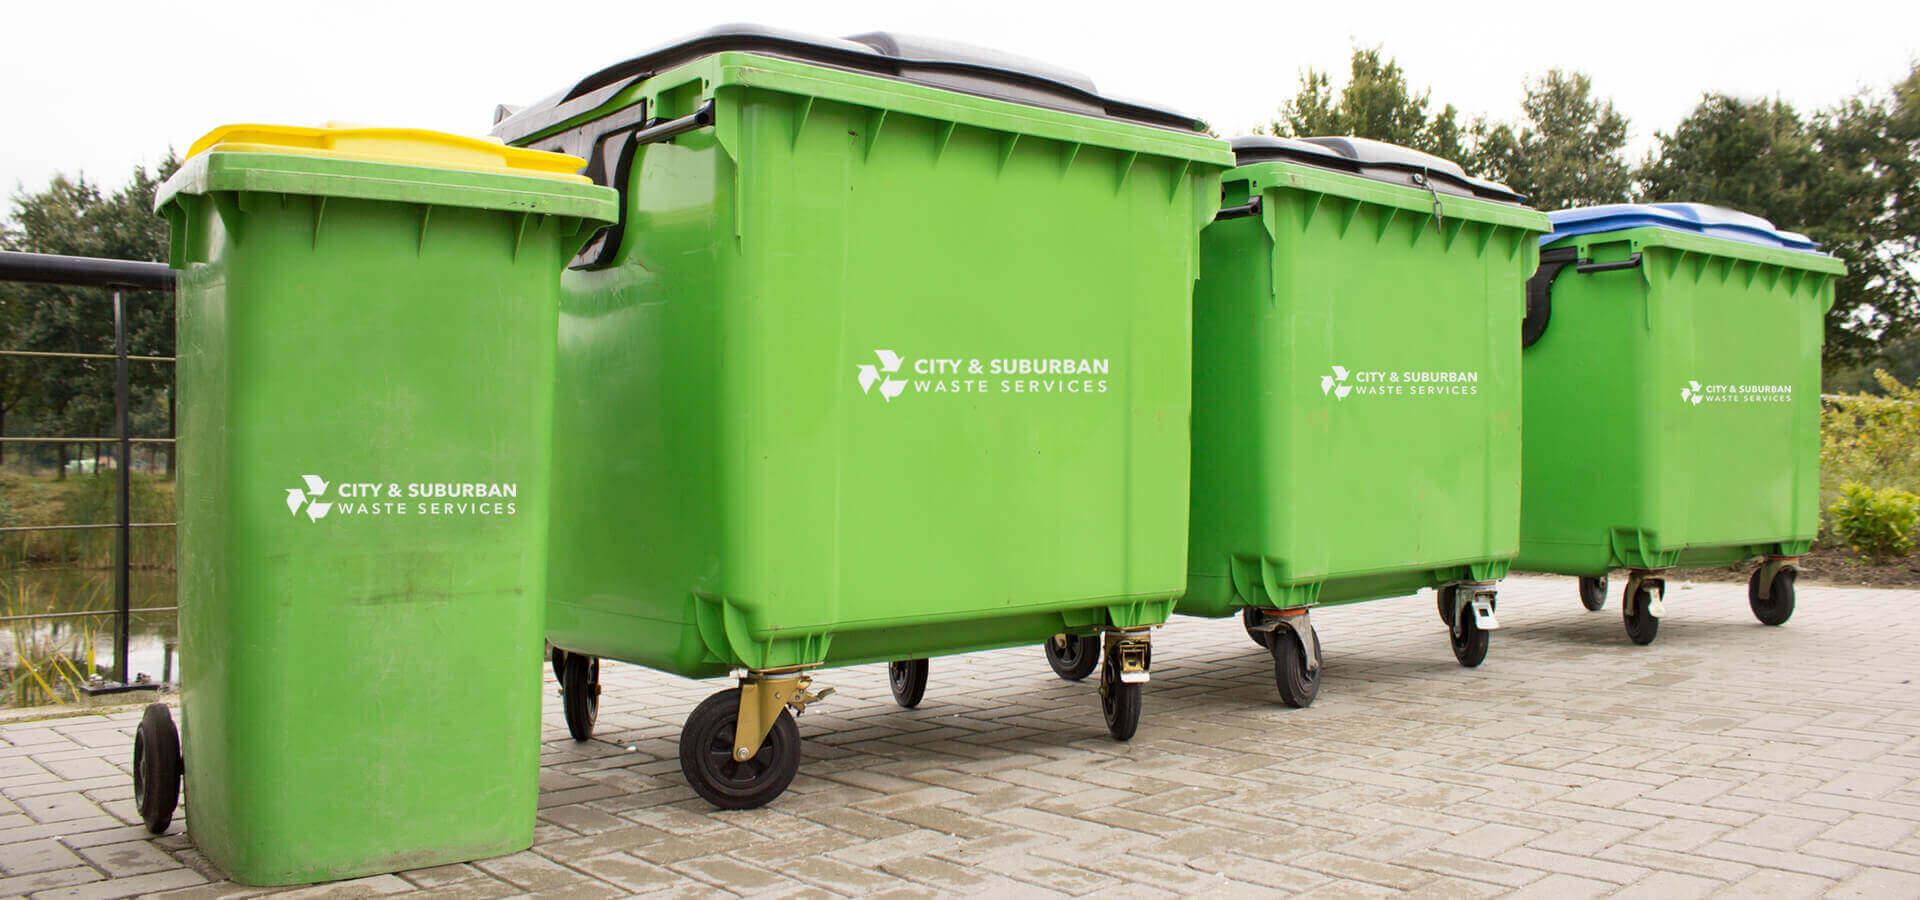 City & Suburban Waste Services Waste Bins hackbridge